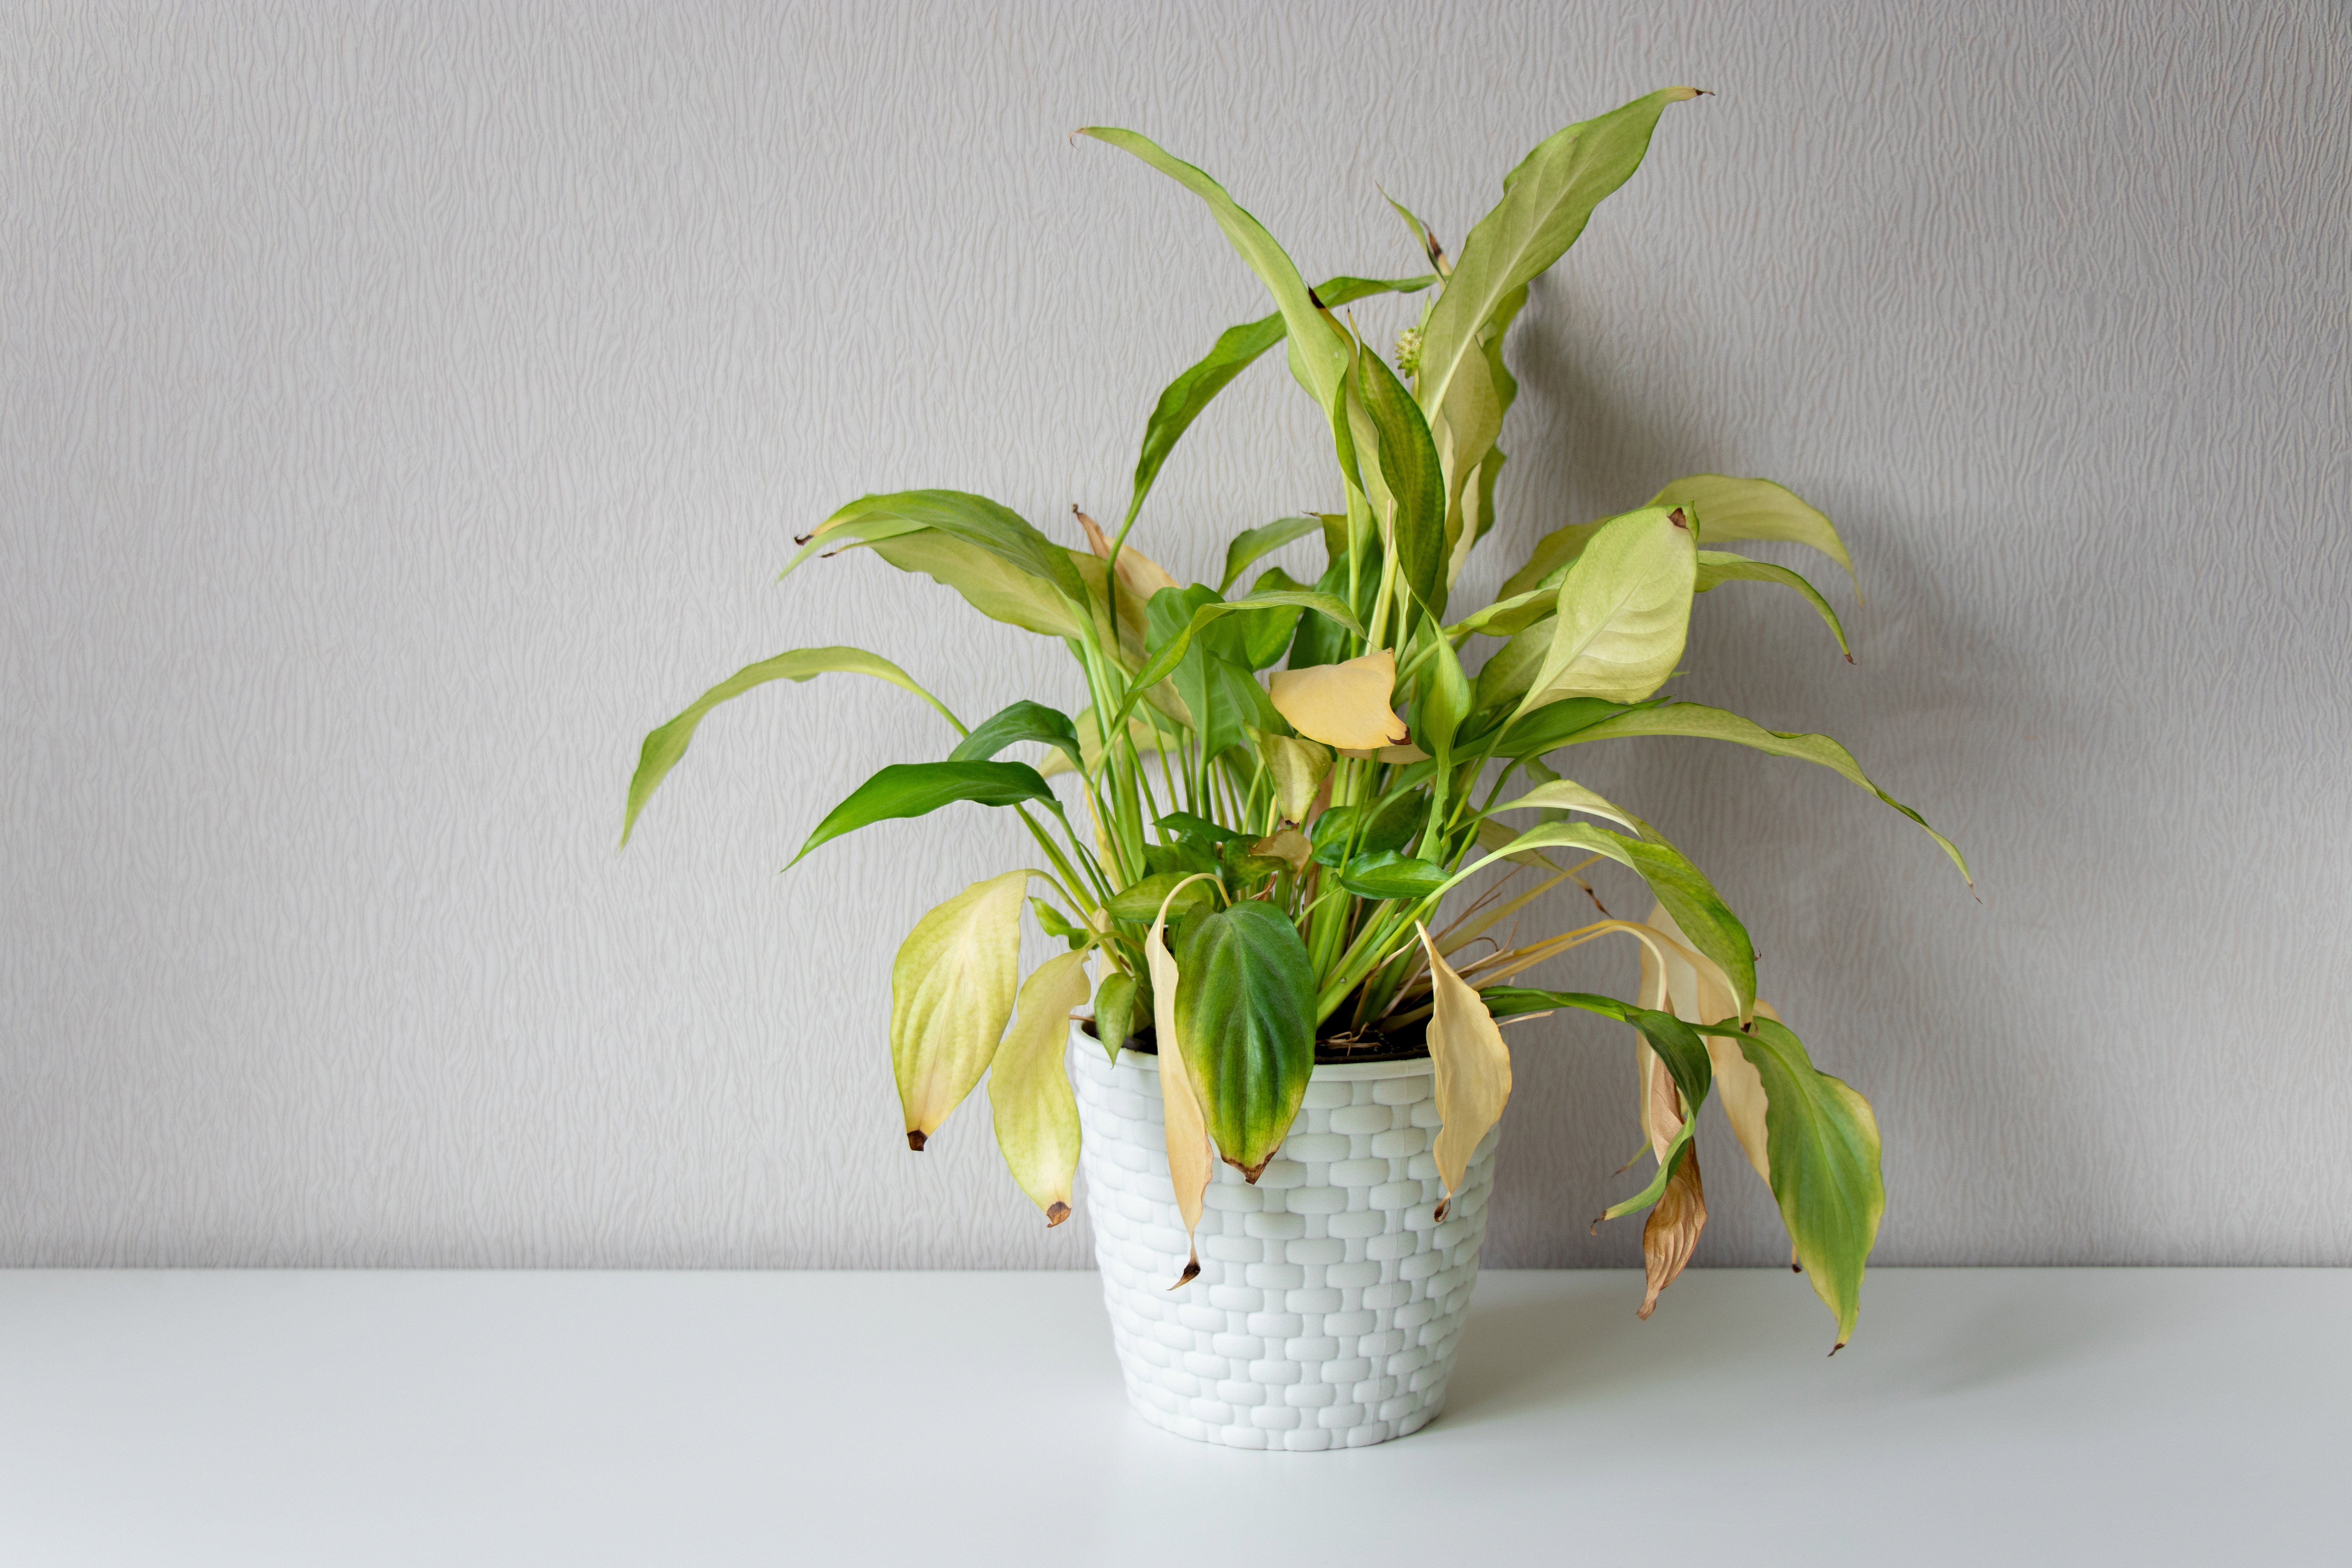 Yellowing plant | Shutterstock